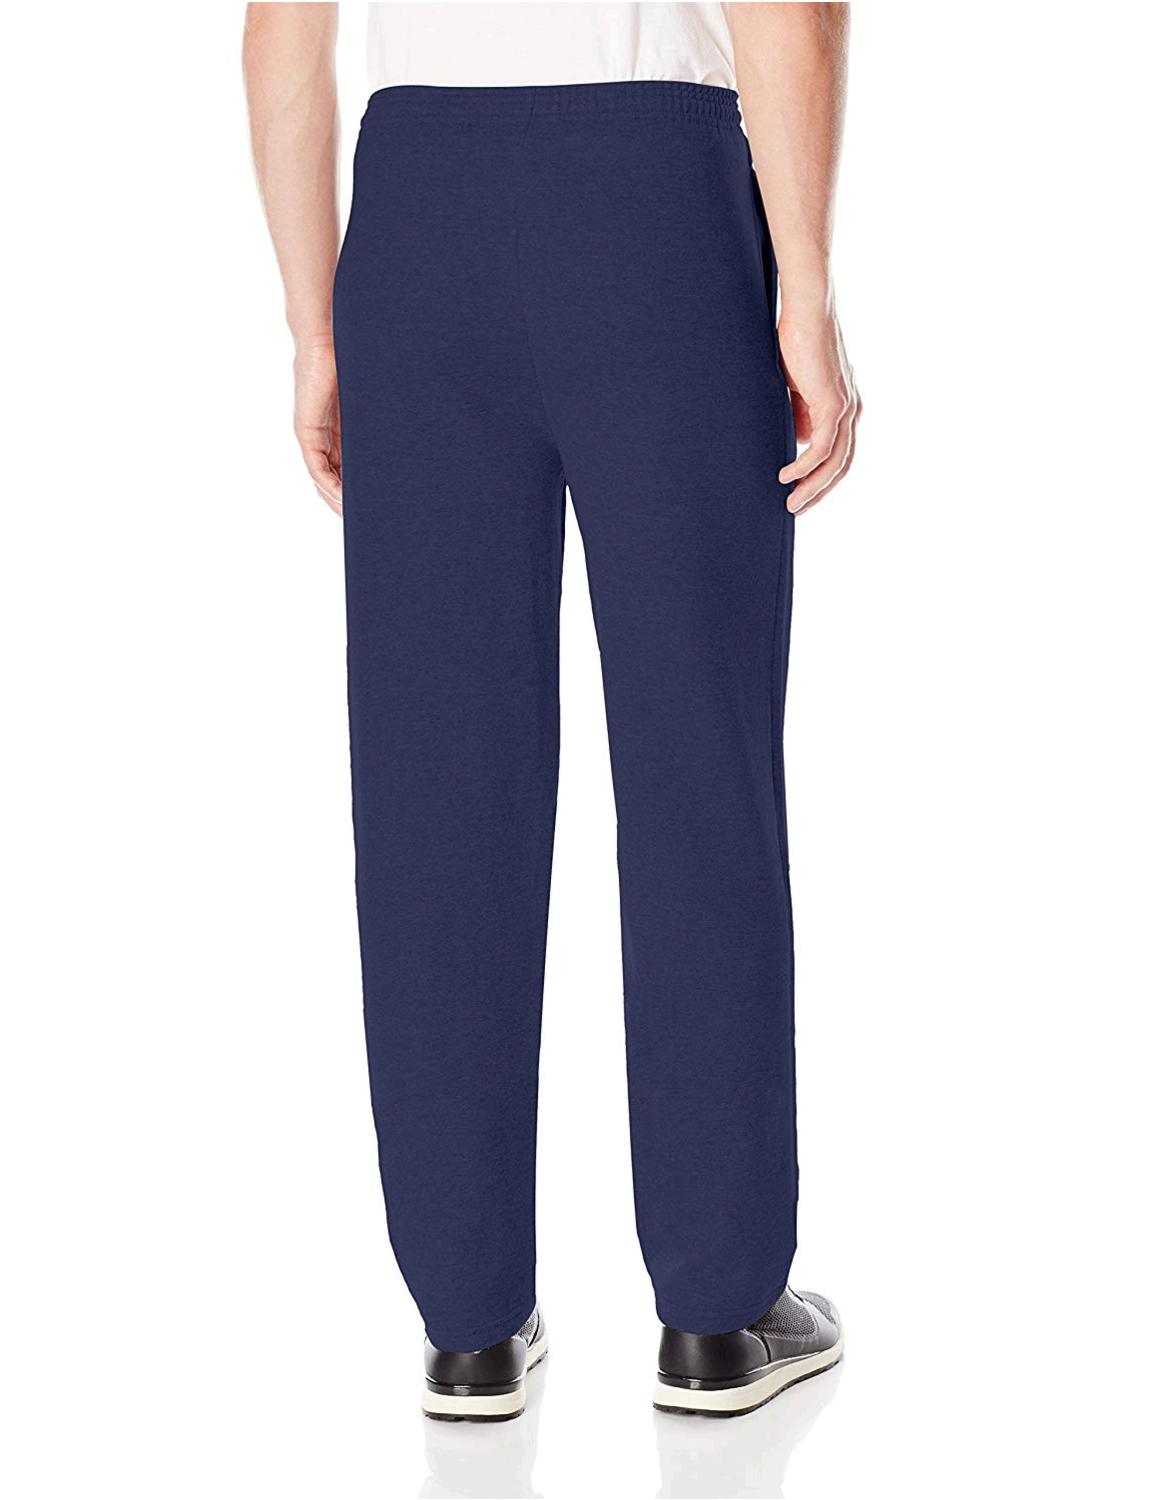 Hanes Men's Ecosmart Open Leg Fleece Pant with Pockets,, Navy, Size X ...